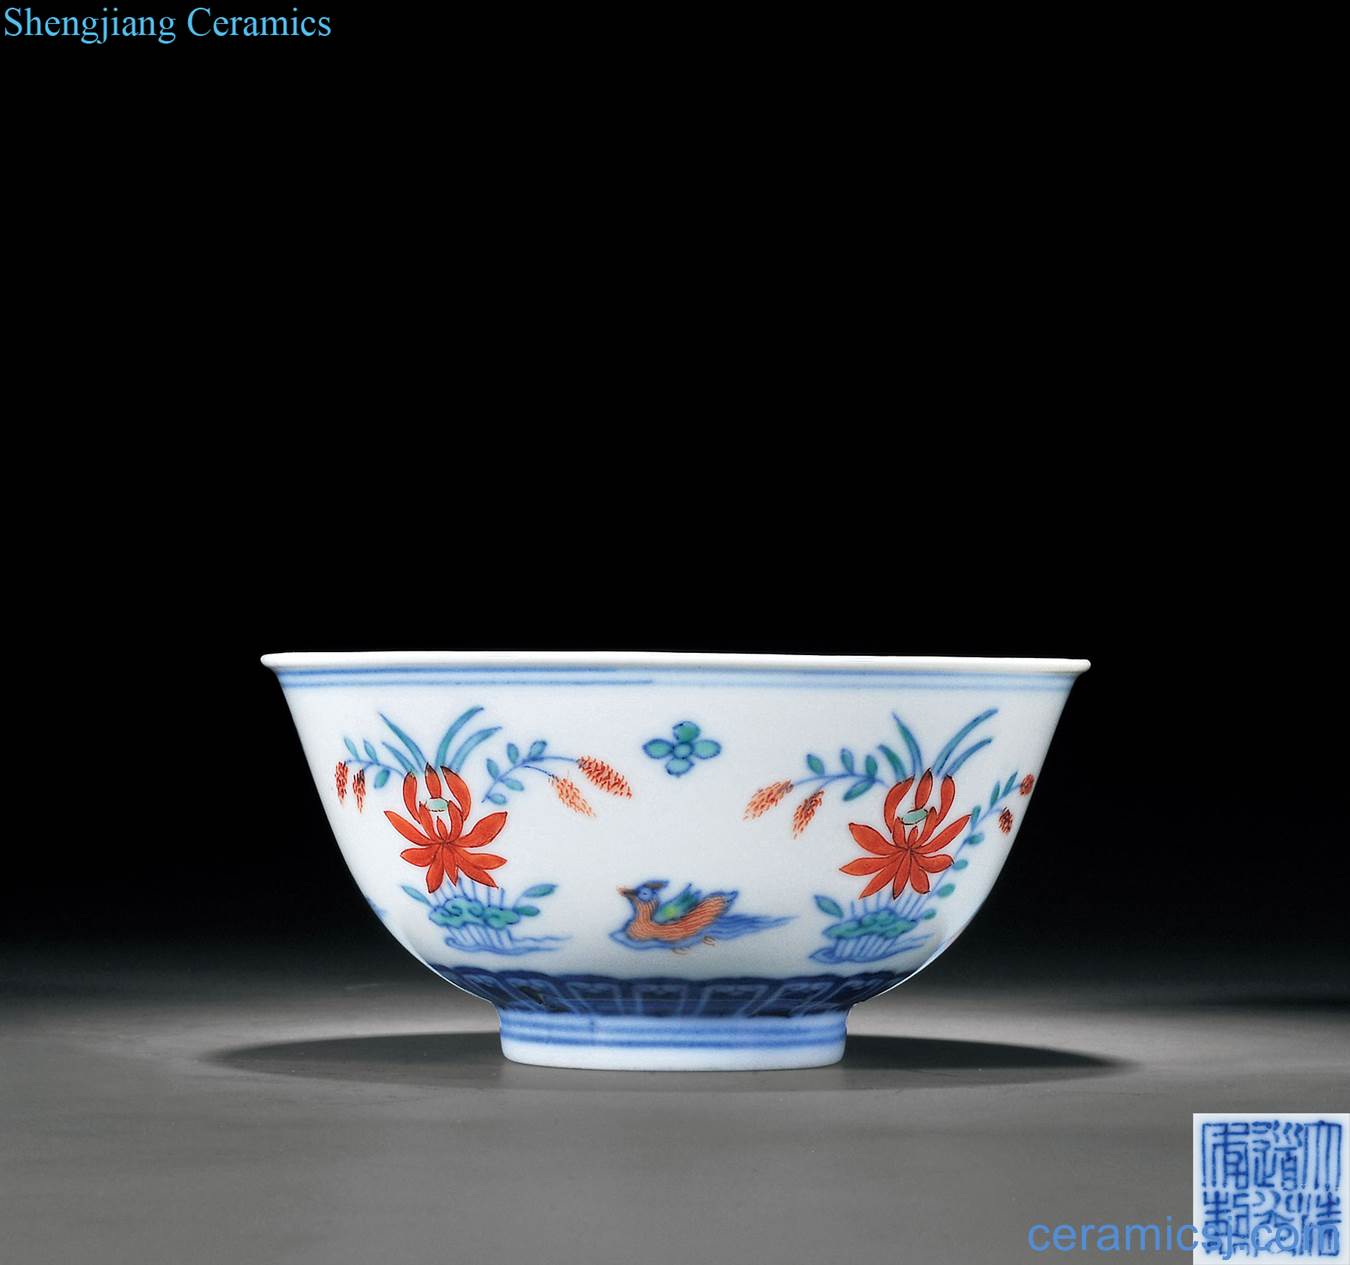 Qing daoguang imitation chenghua bucket color lotus pond yuanyang figure small bowl